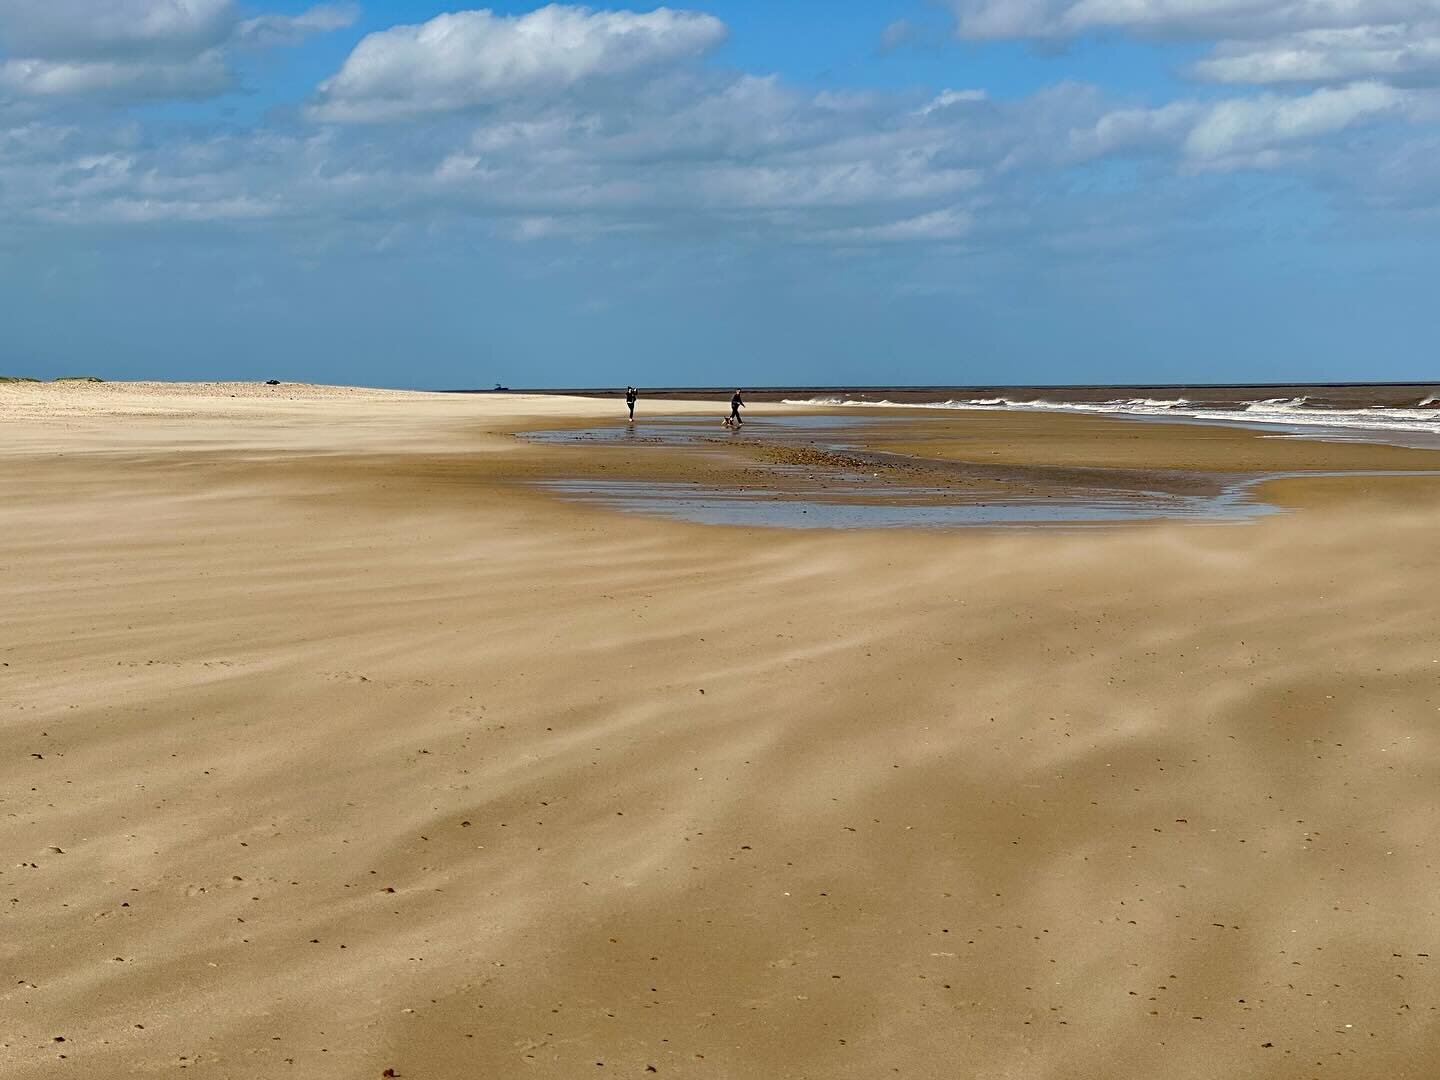 Very windy on the beach today and lots of sand blowing around #beach #wintertonbeach #sand #sandstorm #windy #winterton #wintertononsea #norfolkcoast #aywmc #aywmcjune2020 #ayearwithmycamera